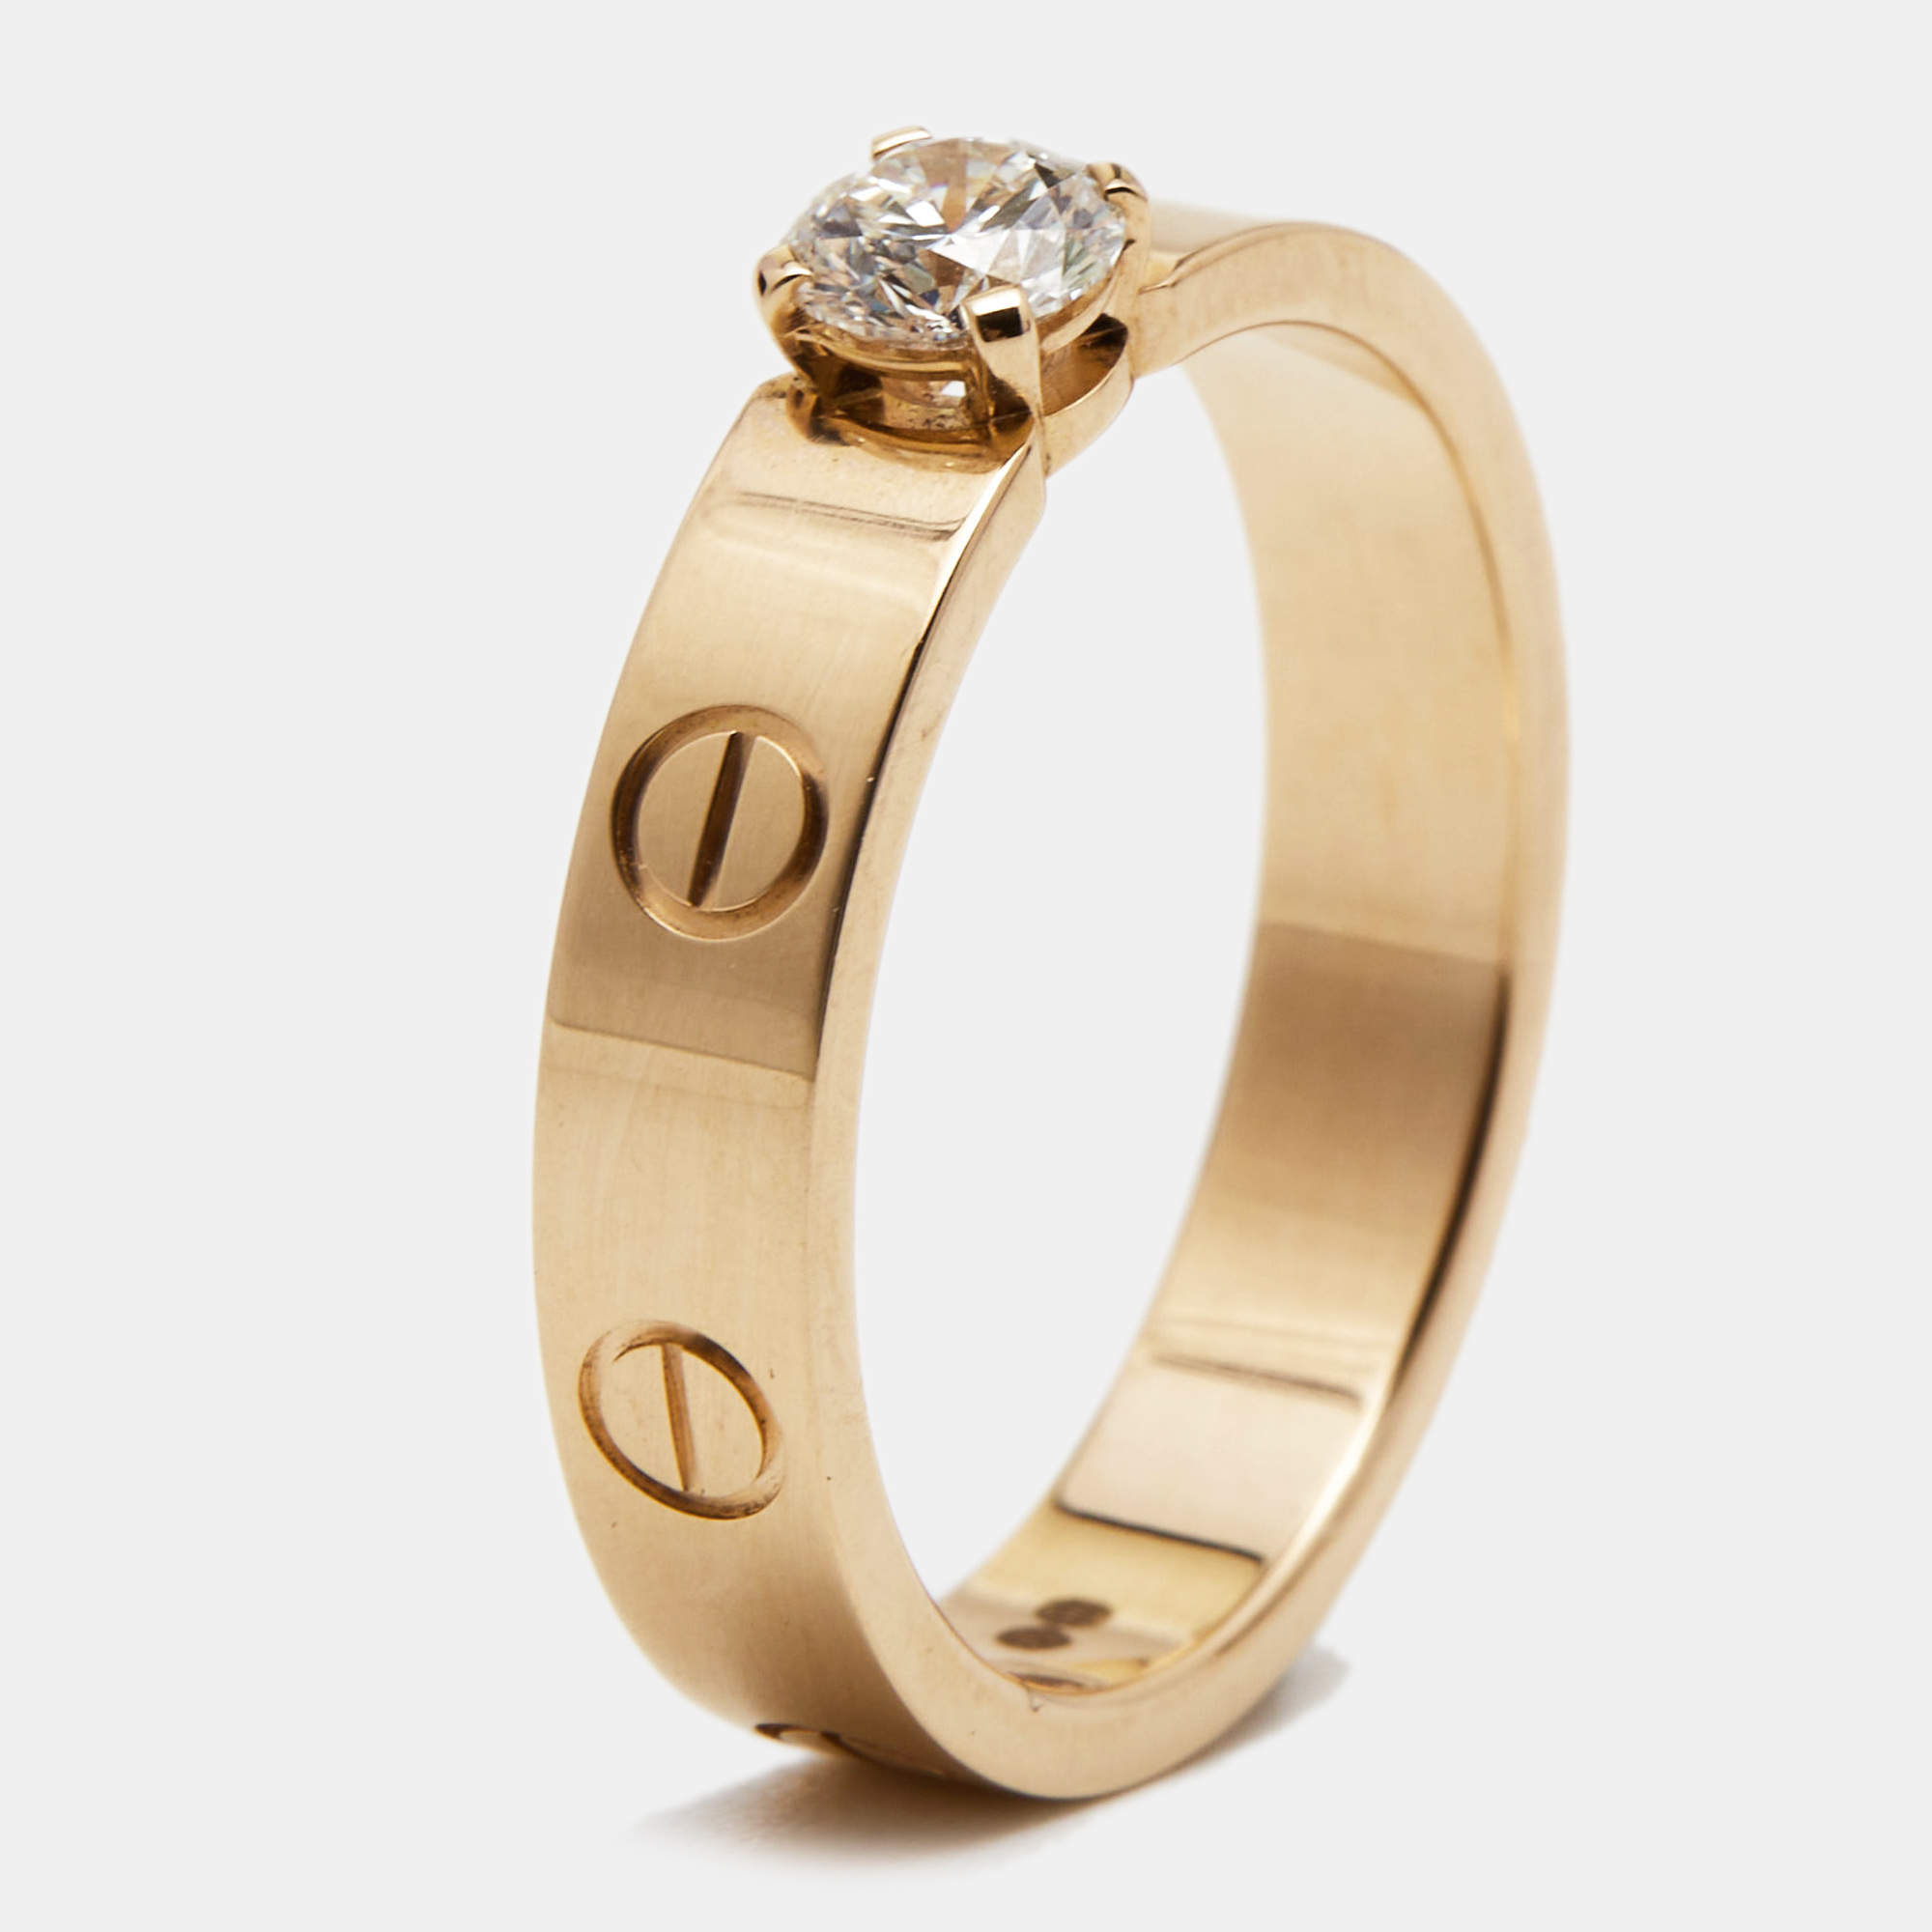 CRB4087600 - LOVE ring, diamond-paved - Pink gold, diamonds - Cartier